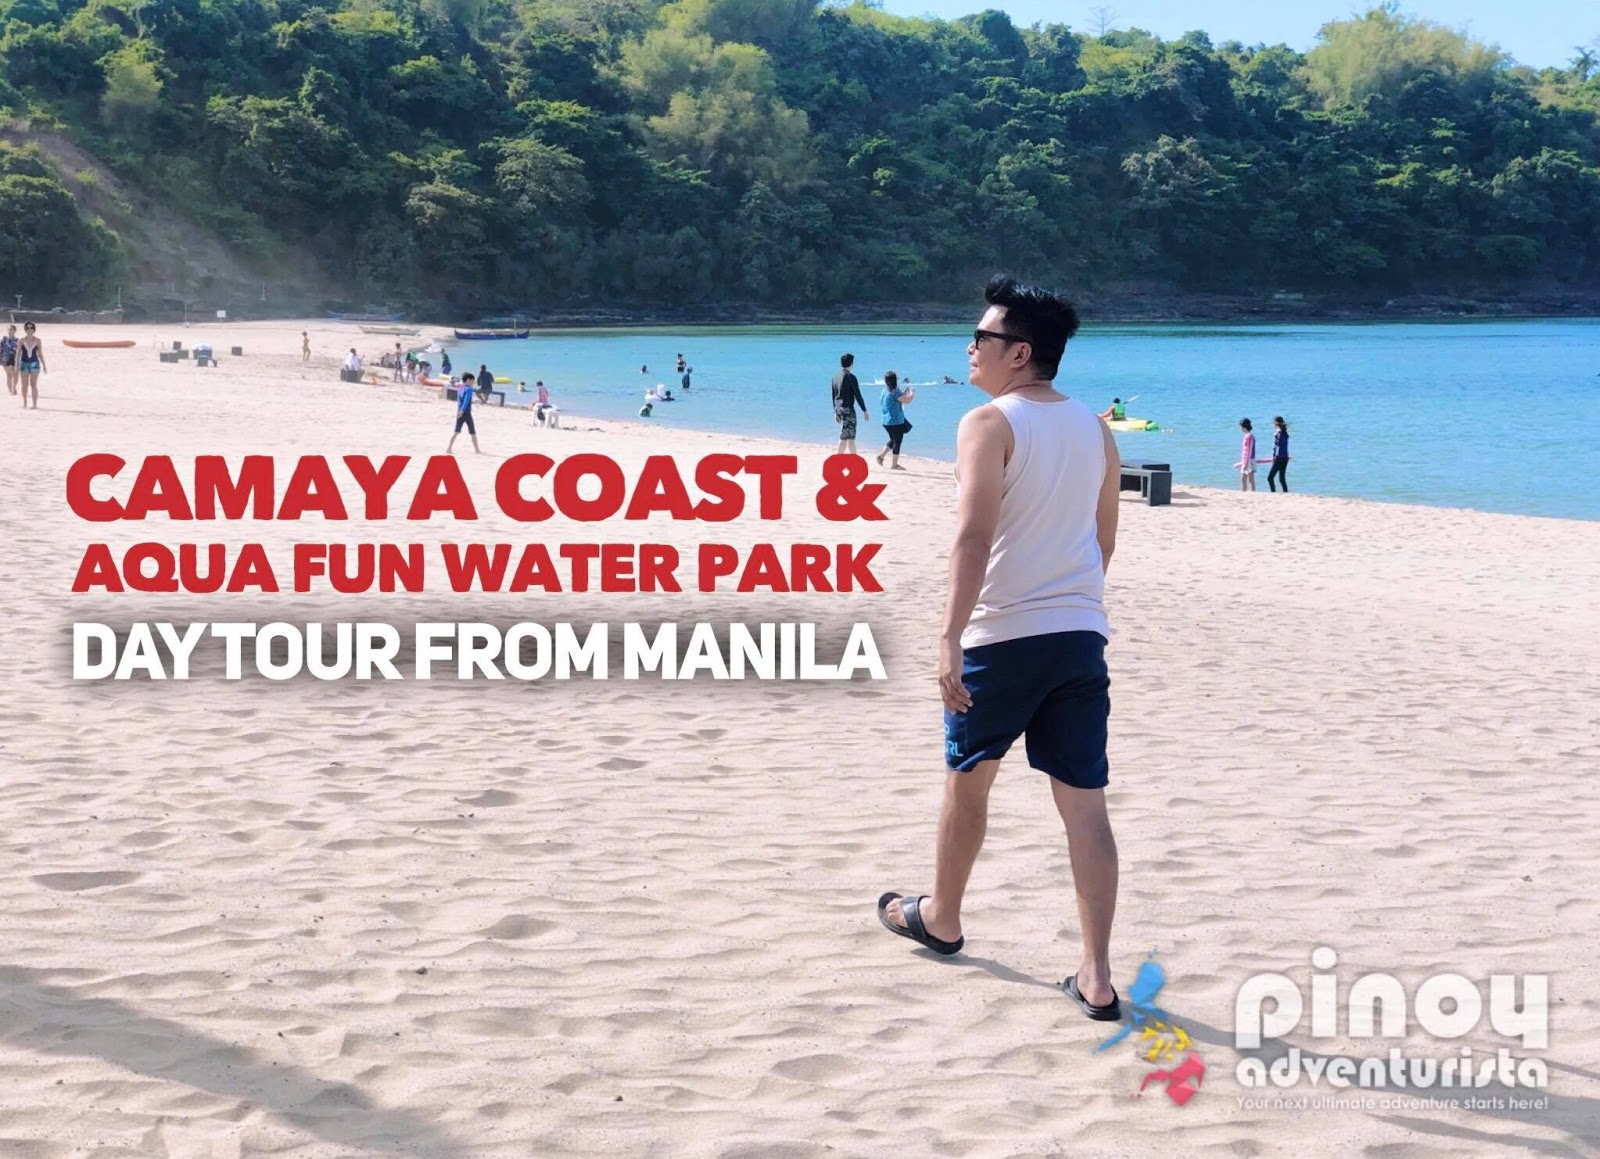 Camaya Coast Beach Resort And Aqua Fun Water Park Day Tour From Manila |  Blogs, Travel Guides, Things To Do, Tourist Spots, Diy Itinerary, Hotel  Reviews - Pinoy Adventurista